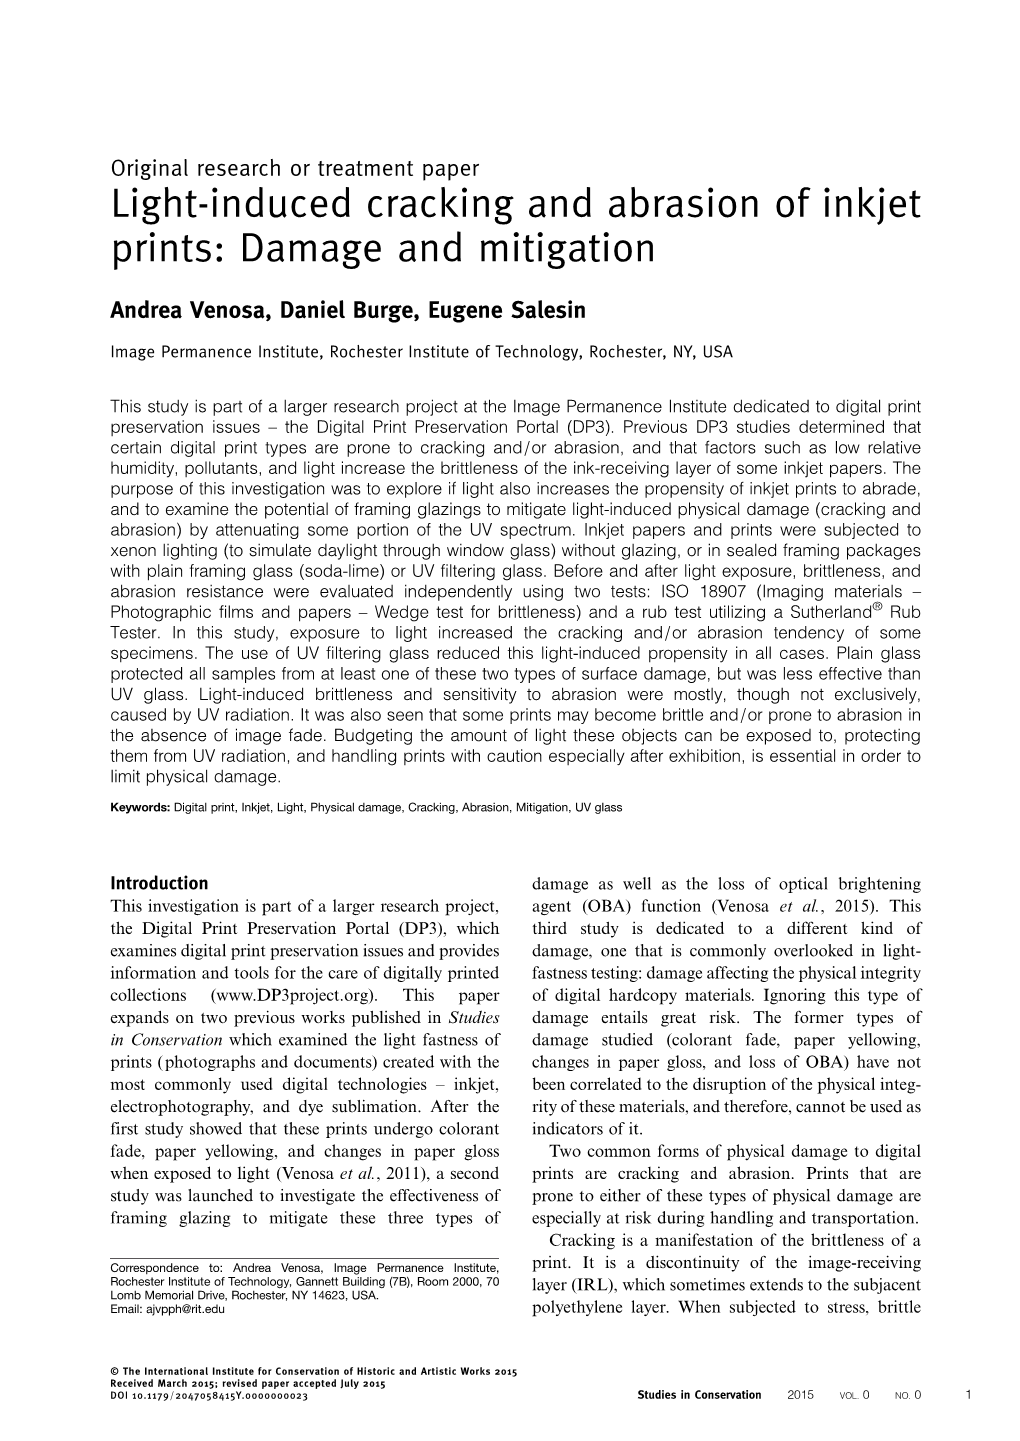 Light-Induced Cracking and Abrasion of Inkjet Prints: Damage and Mitigation